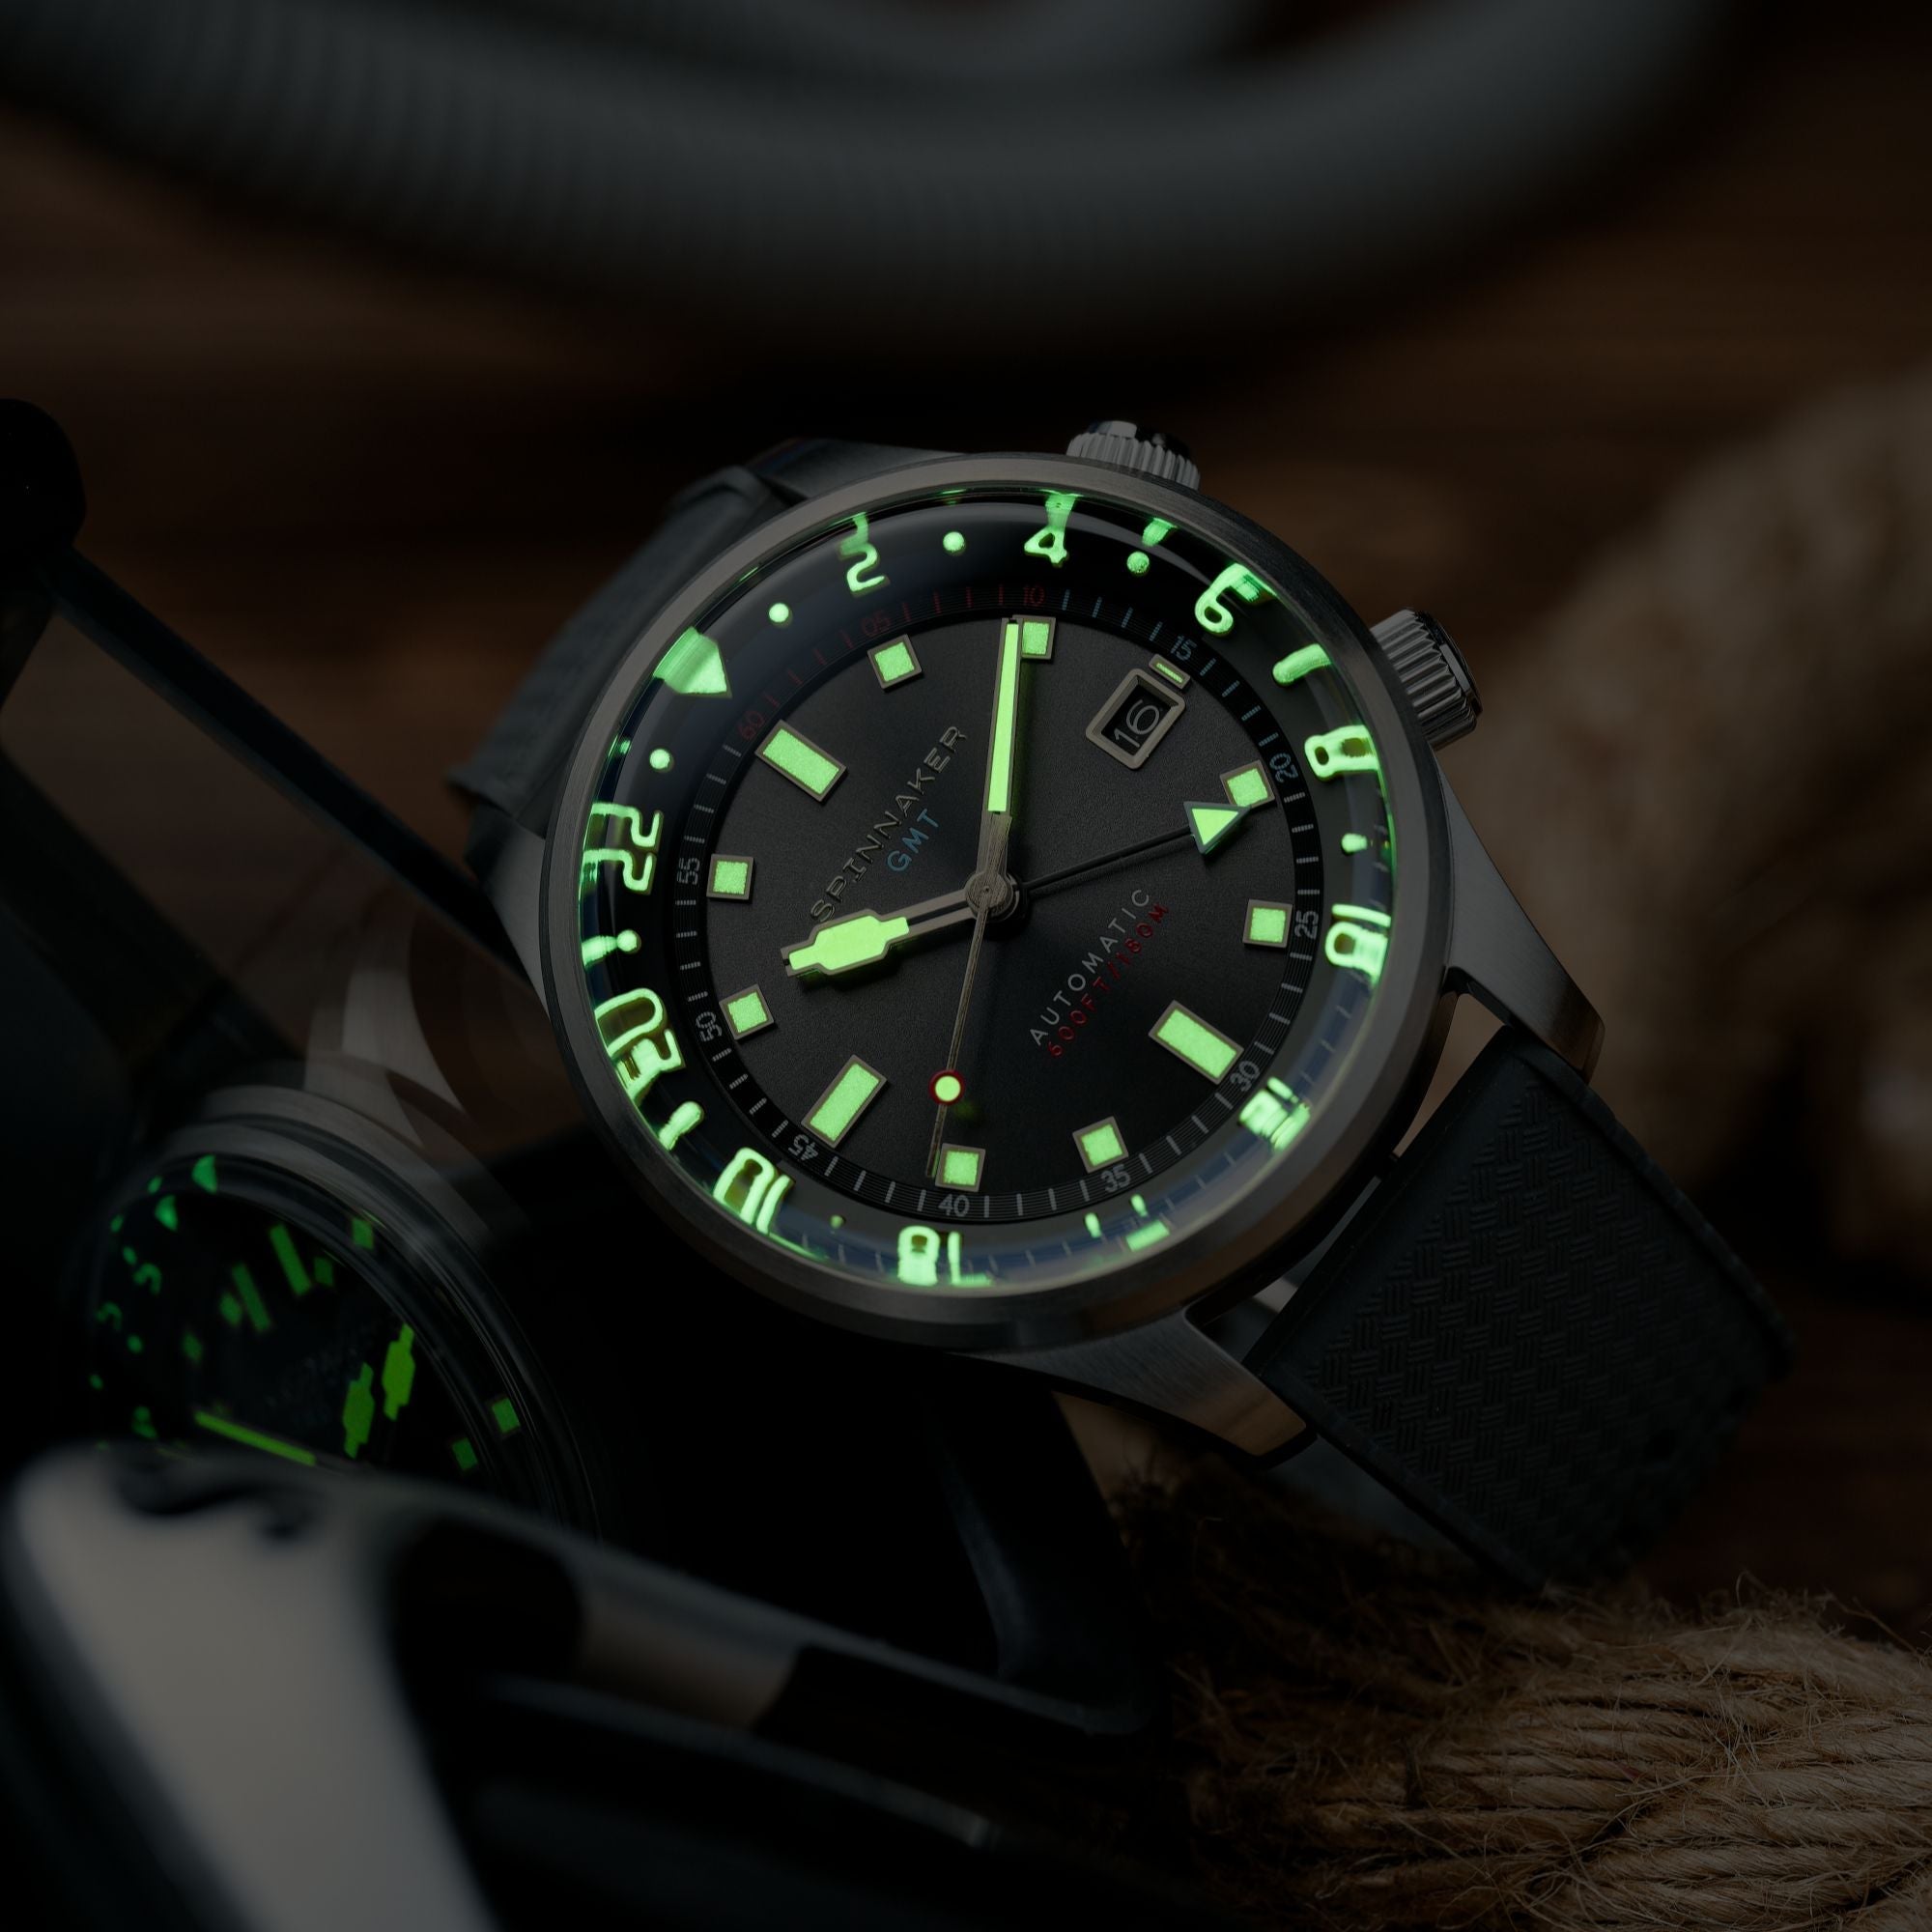 SPINNAKER Spinnaker Bradner GMT Automatic Uniform Grey Men's Watch SP-5121-33